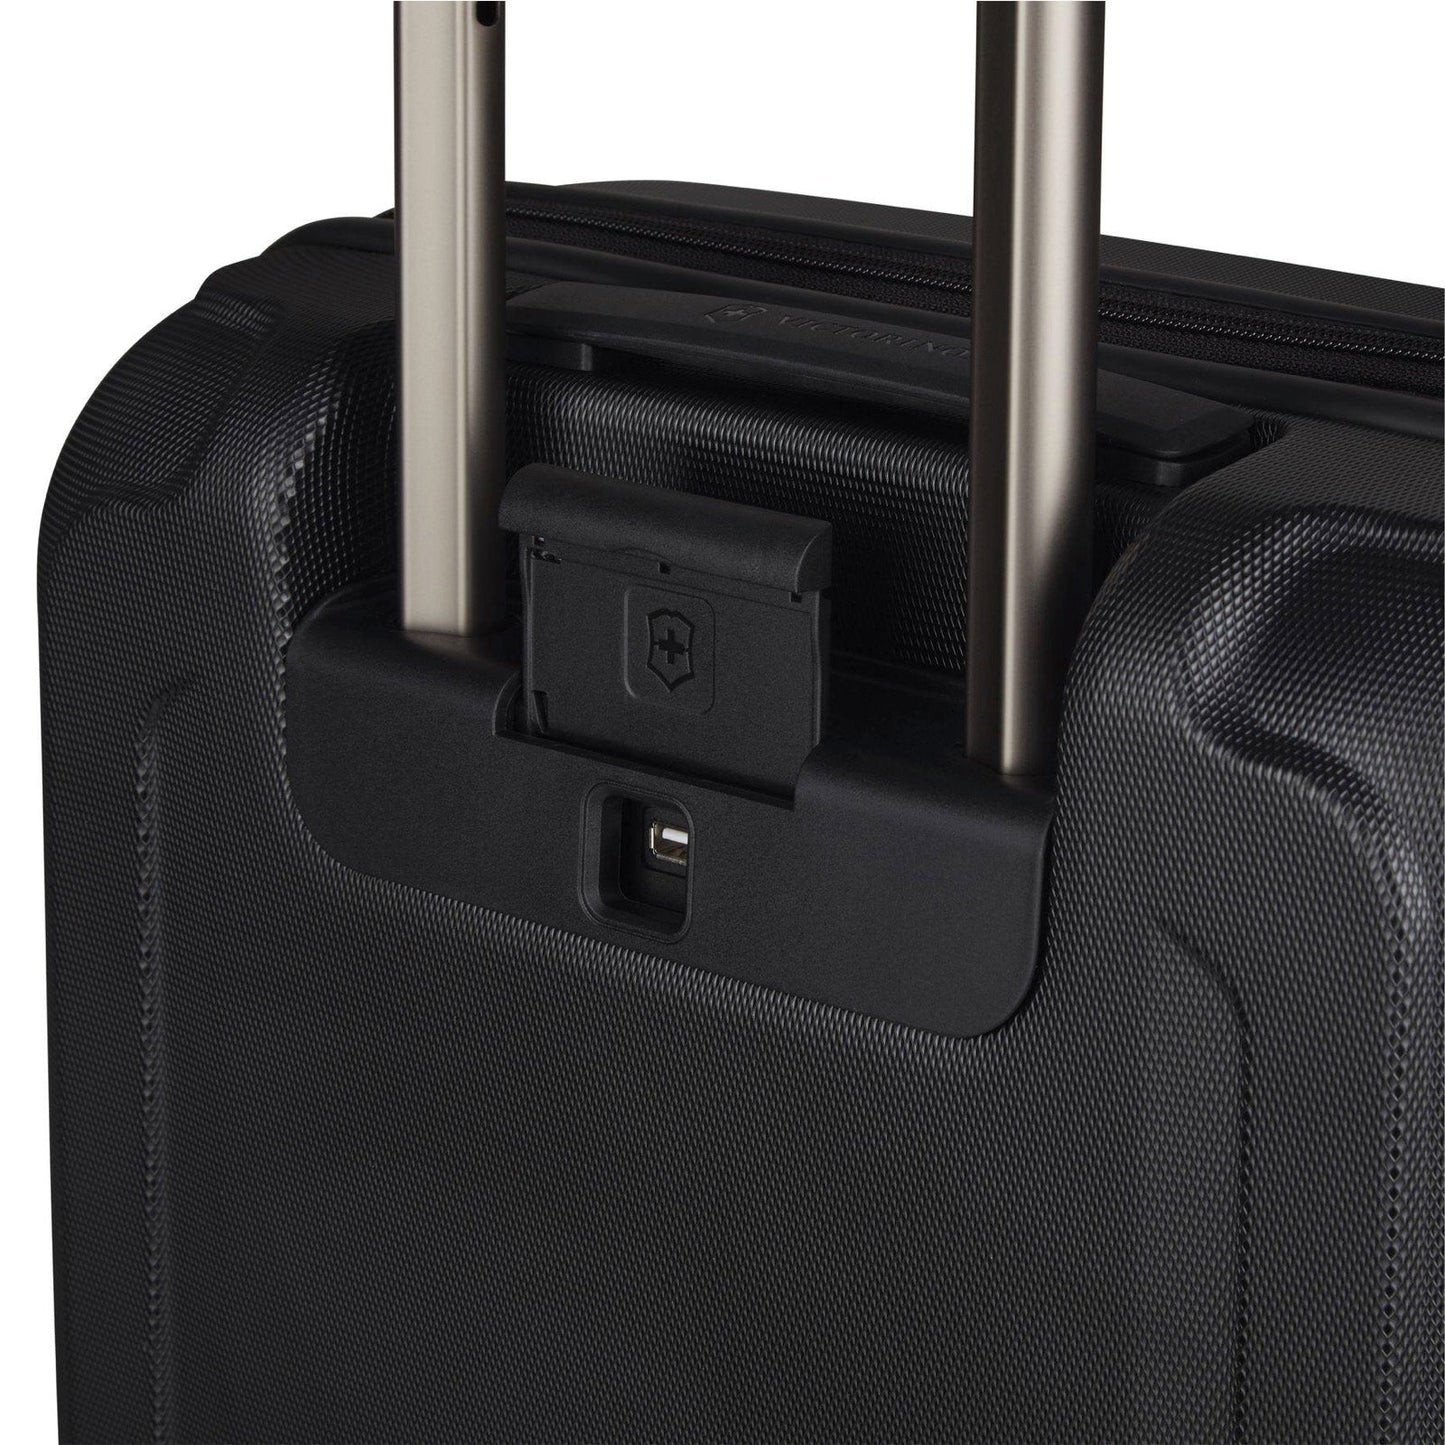 Victorinox Werks Traveler 6.0 Hardside Global Carry-On (609968)